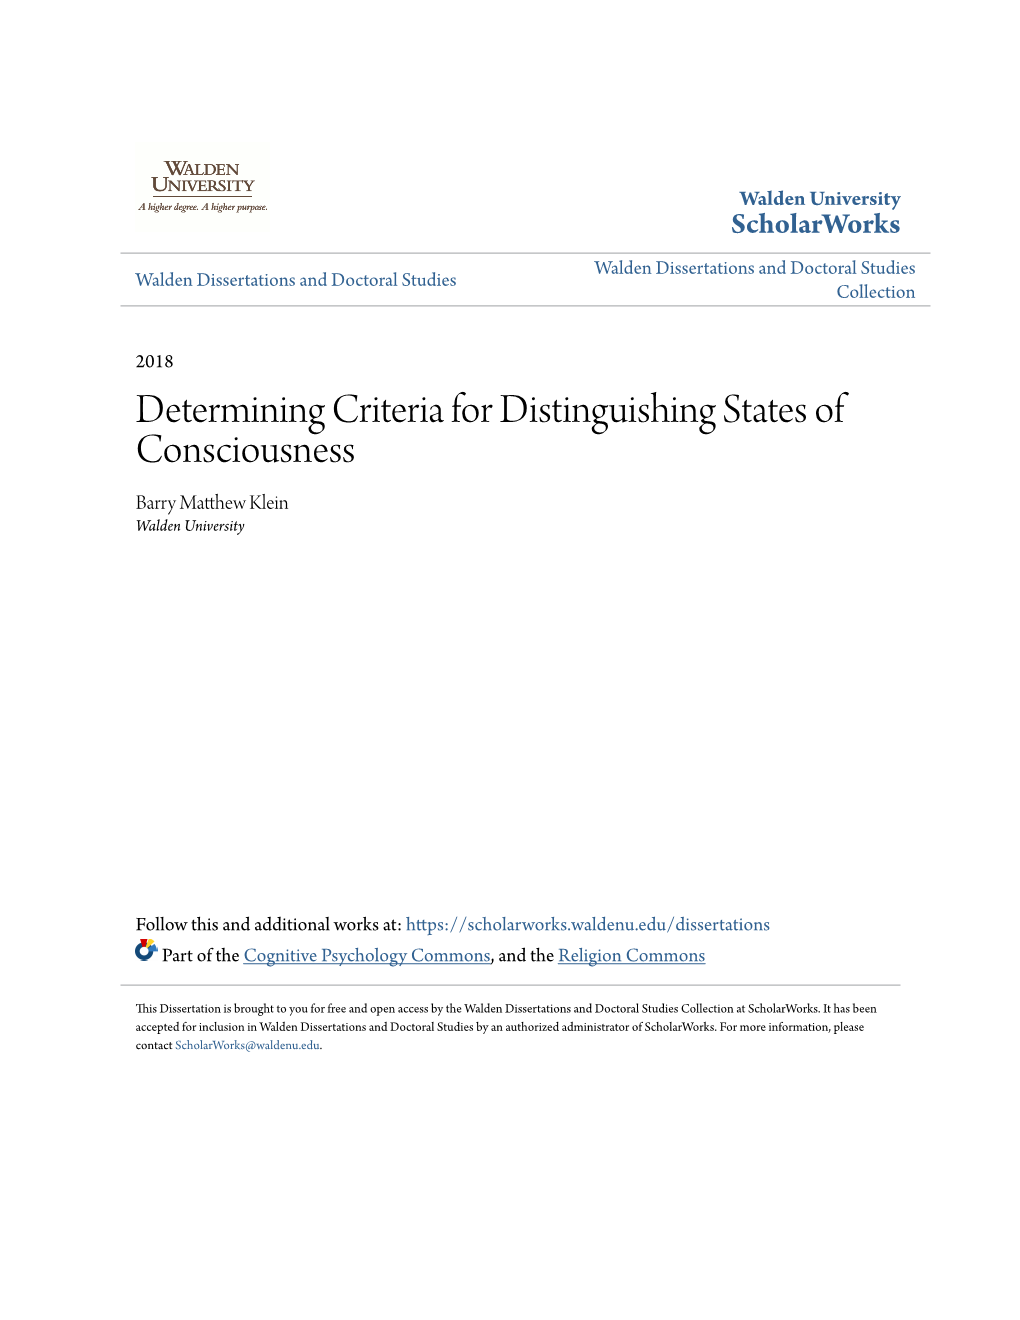 Determining Criteria for Distinguishing States of Consciousness Barry Matthew Klein Walden University